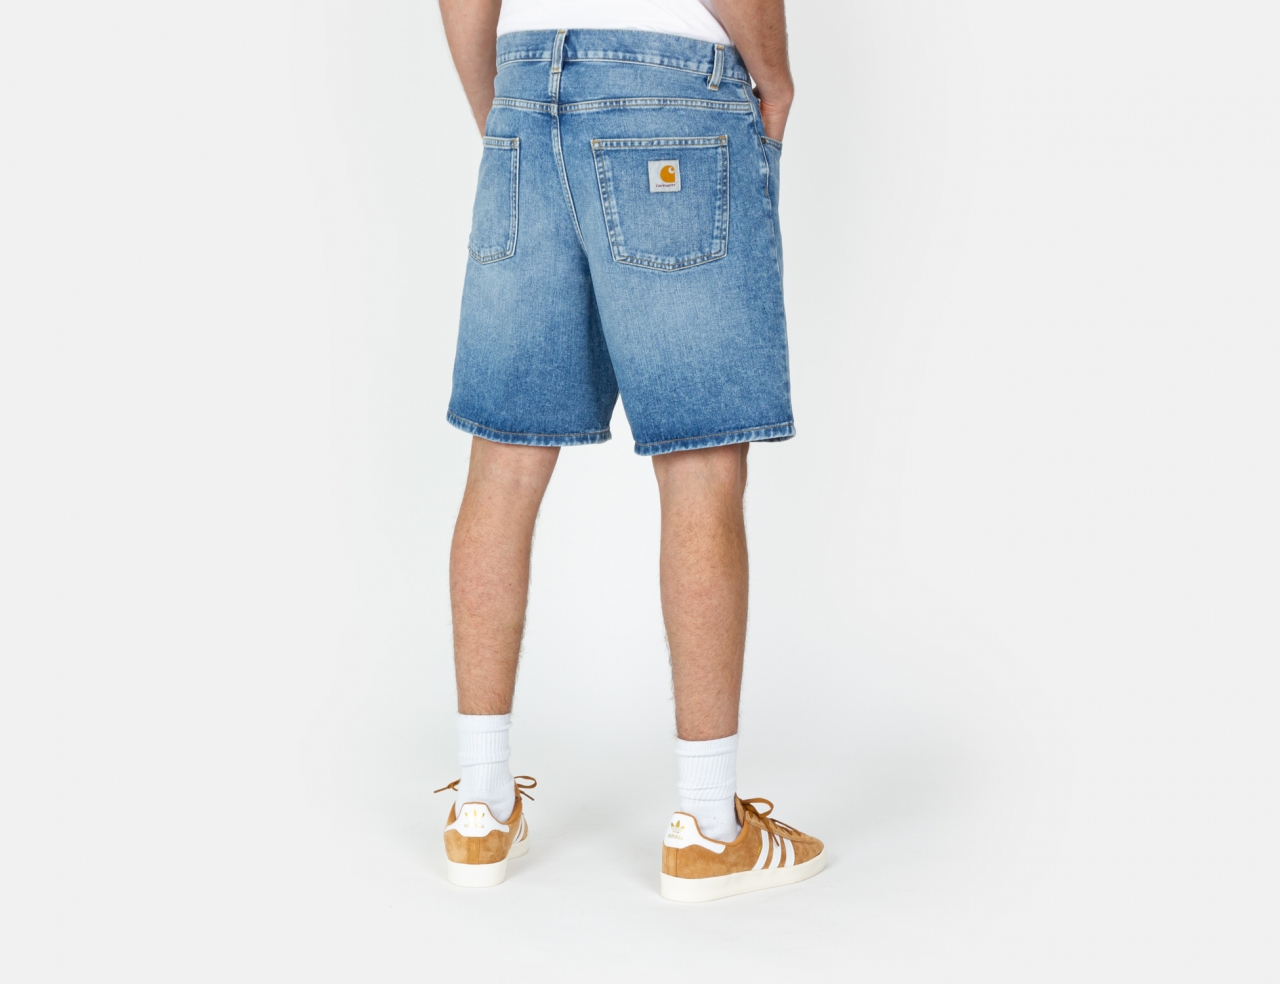 Carhartt WIP Newel Jeans Shorts - Blue worn bleached